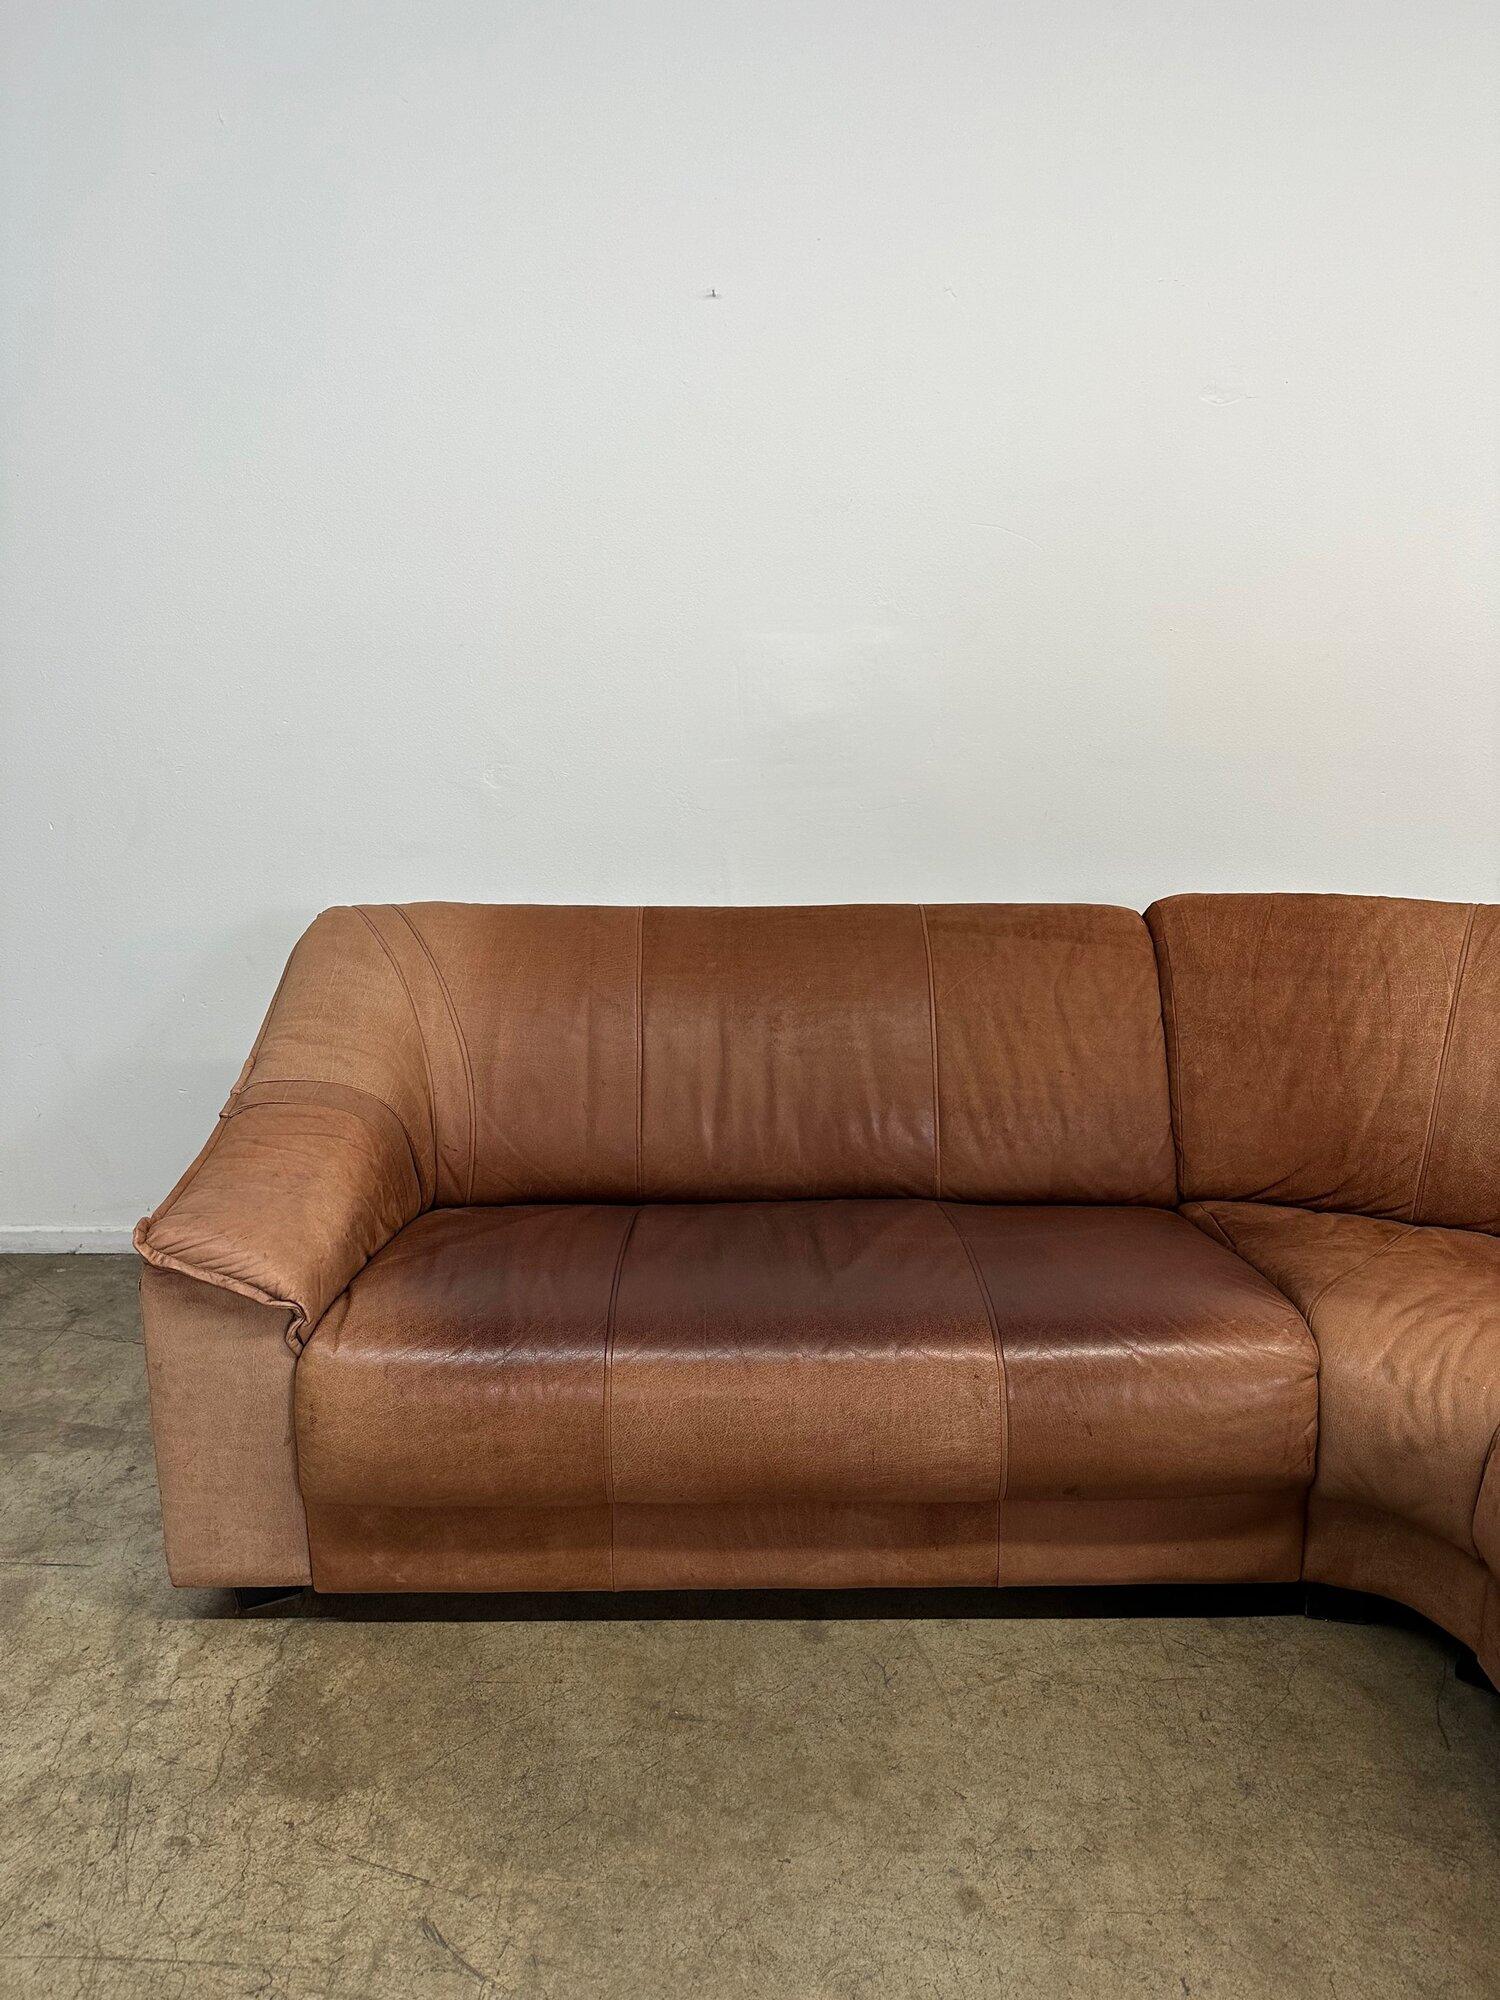 ikea leather furniture